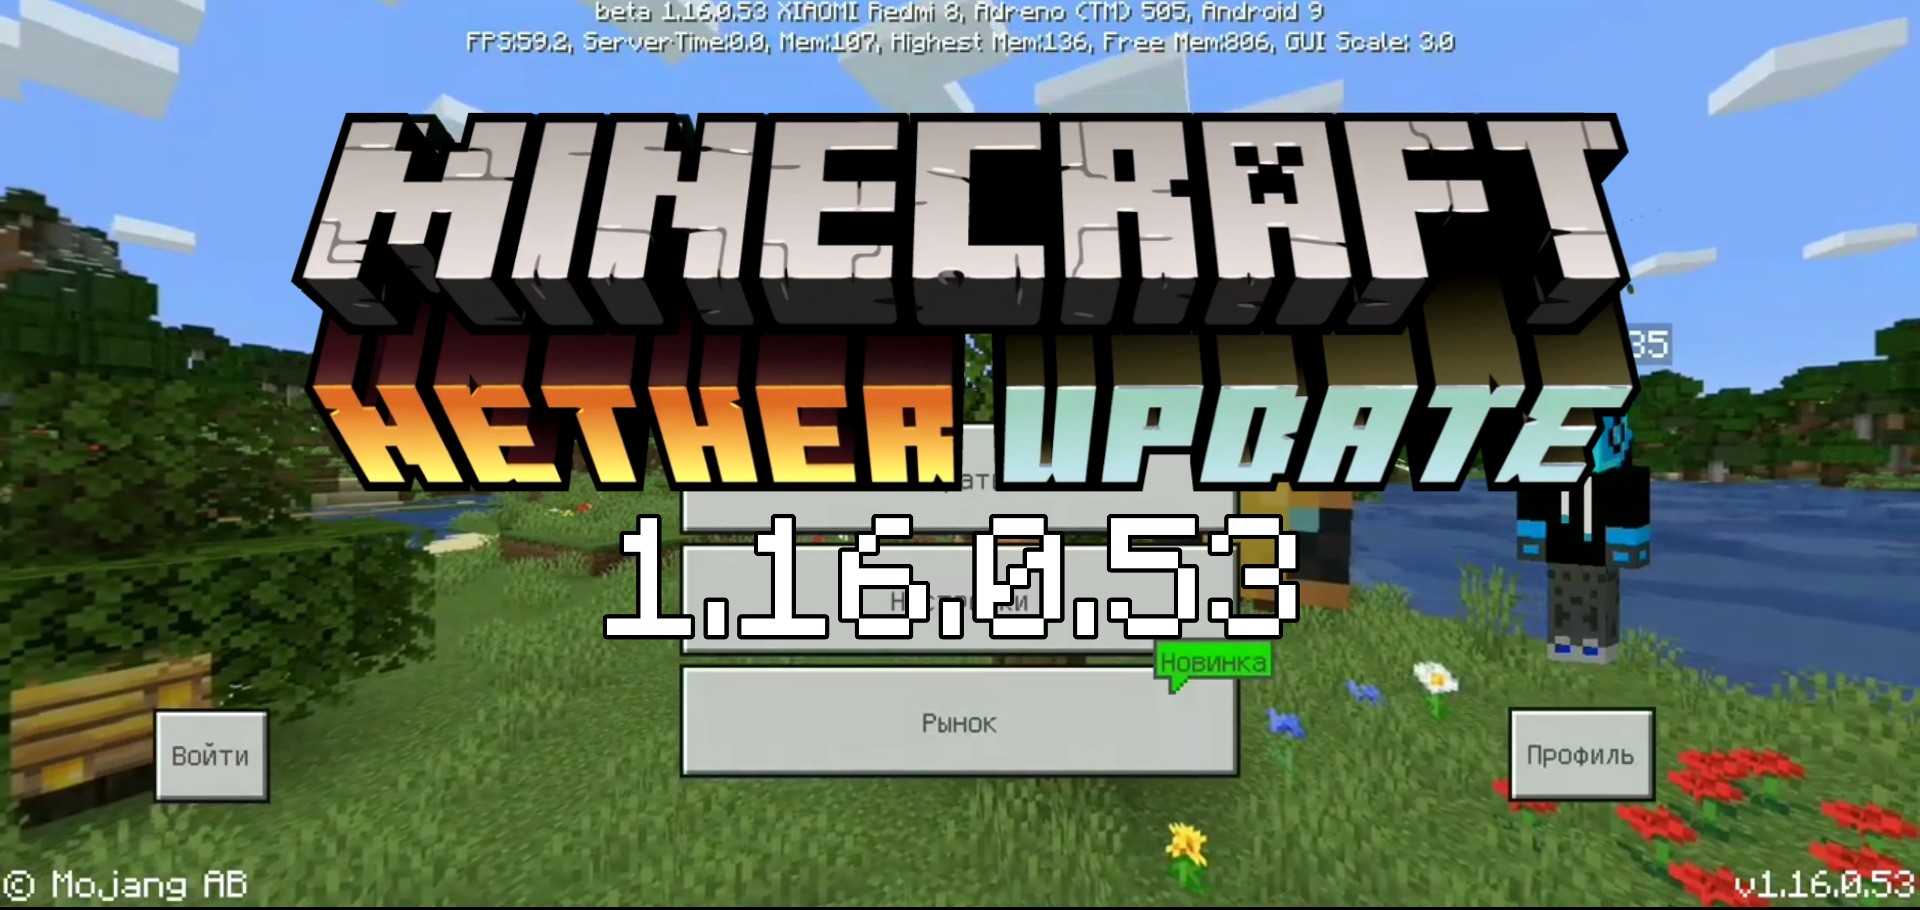 Minecraft Bedrock Edition 1.16.0.53 Nether Update